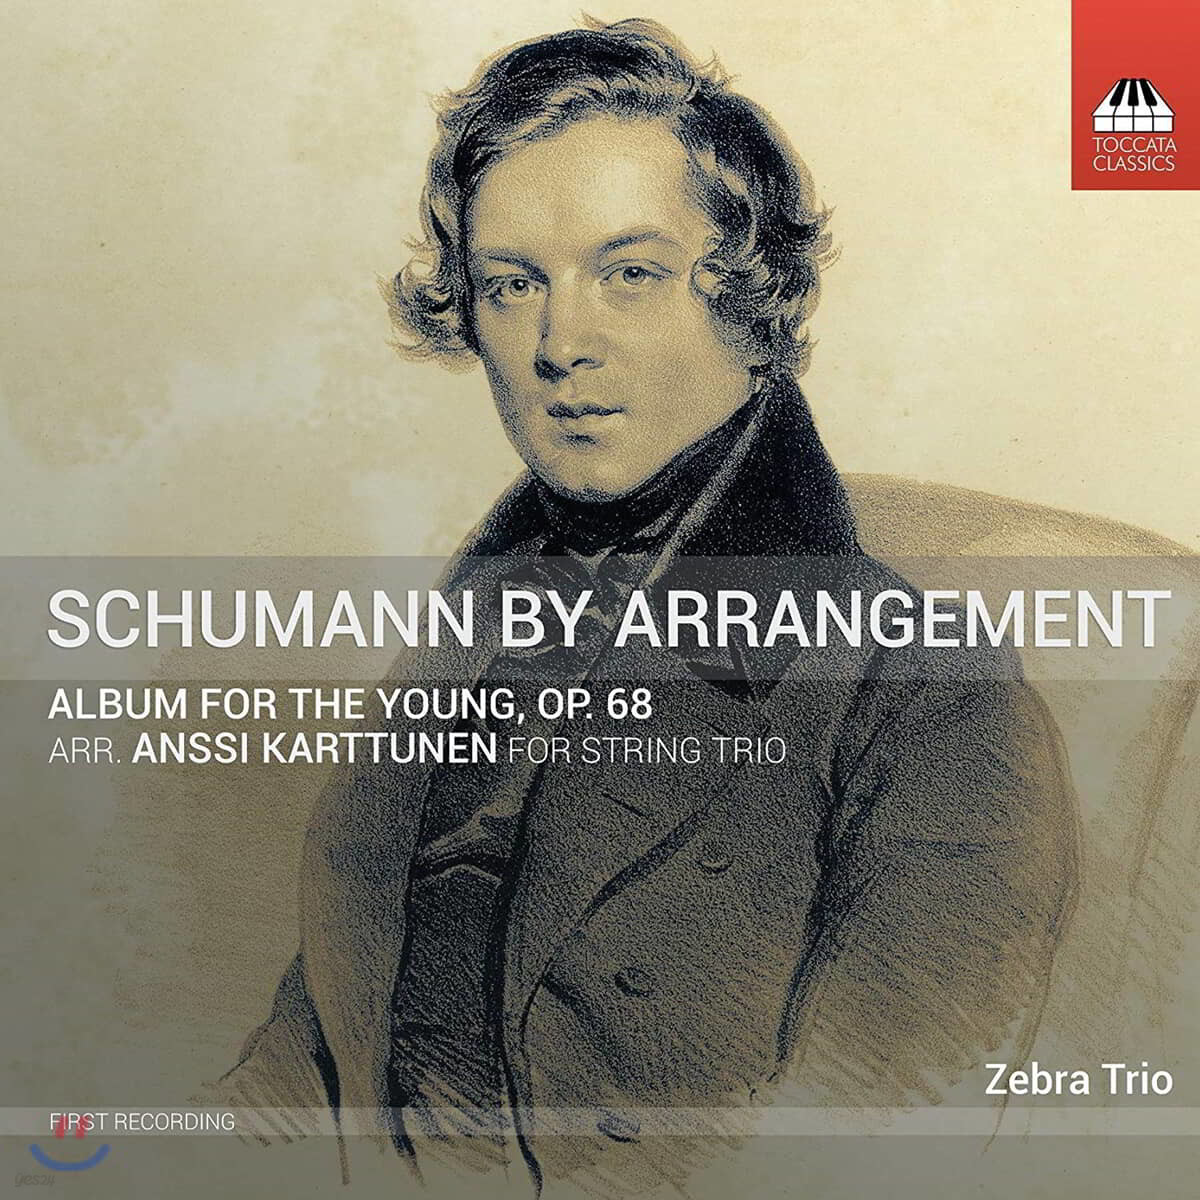 Zebra Trio 슈만: 청소년을 위한 앨범 [현악삼중주 편곡 버전] (Schumann: Album for the Young, Op. 68)